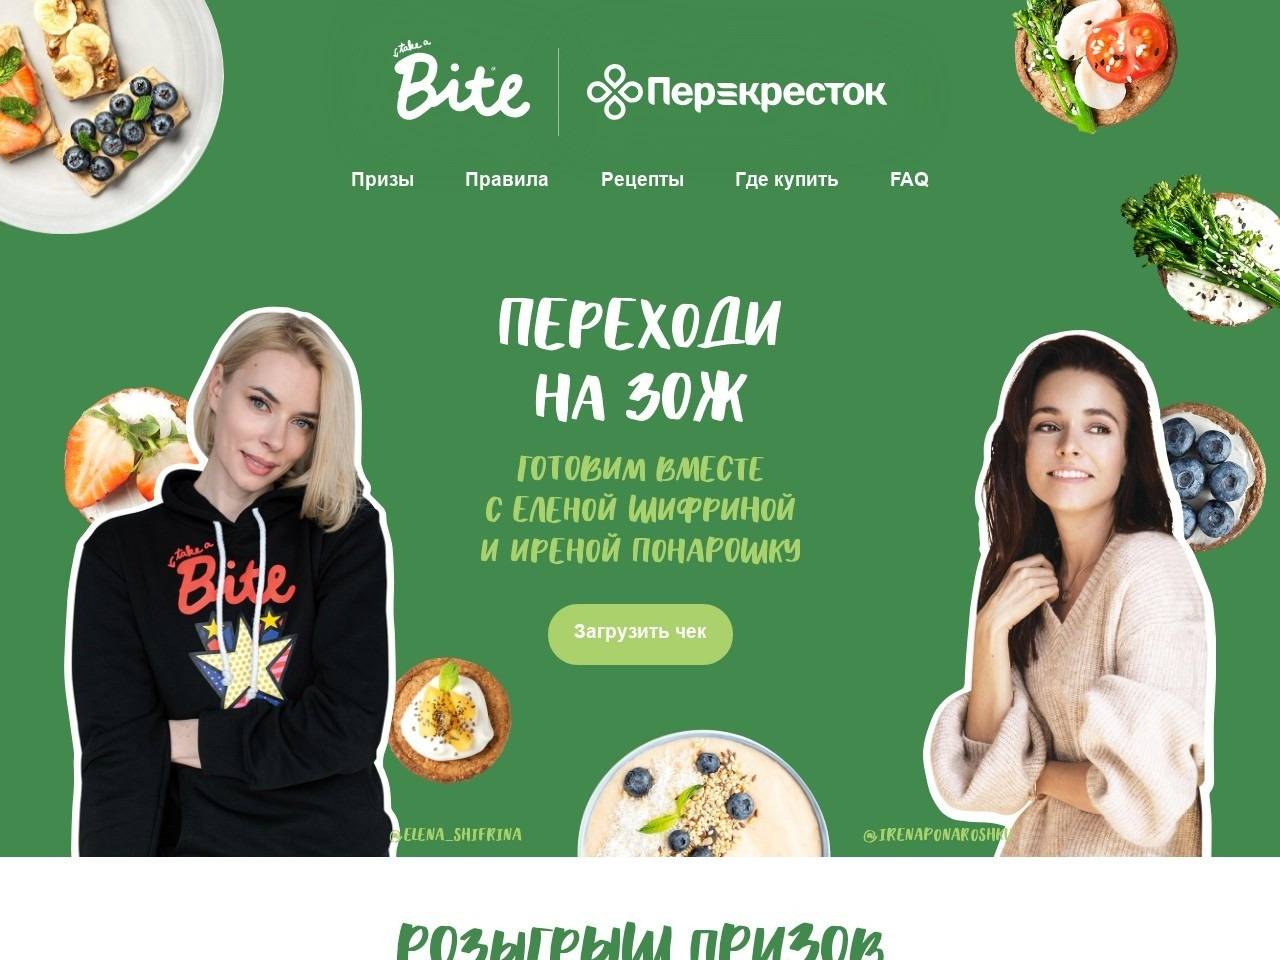 www.bitekonkurs.ru зарегистрировать чек 